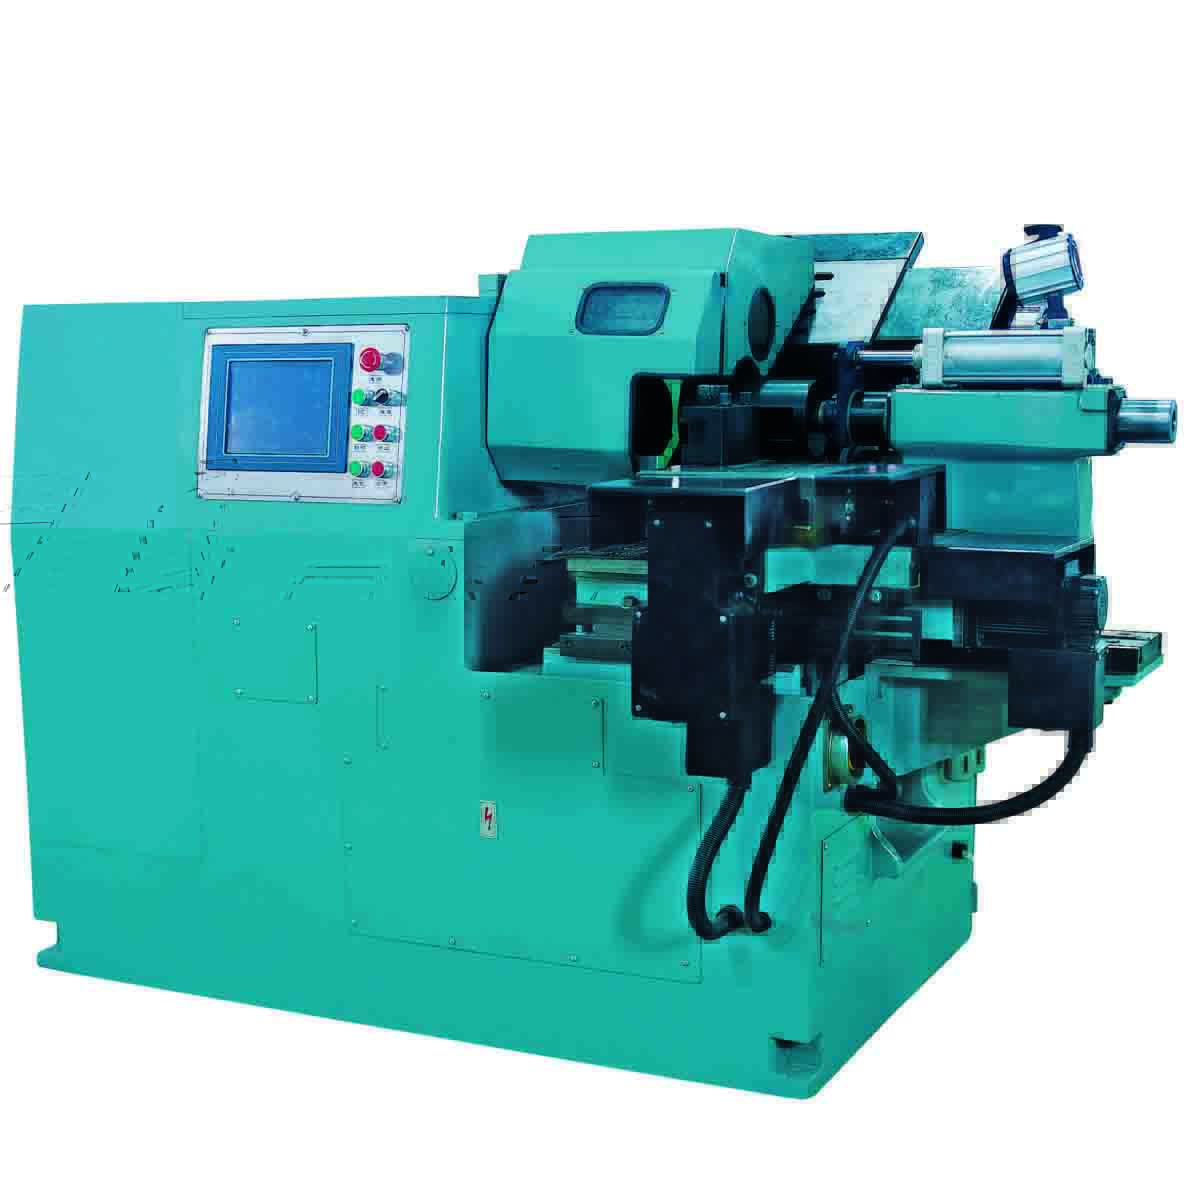 CNC flange lathe machine